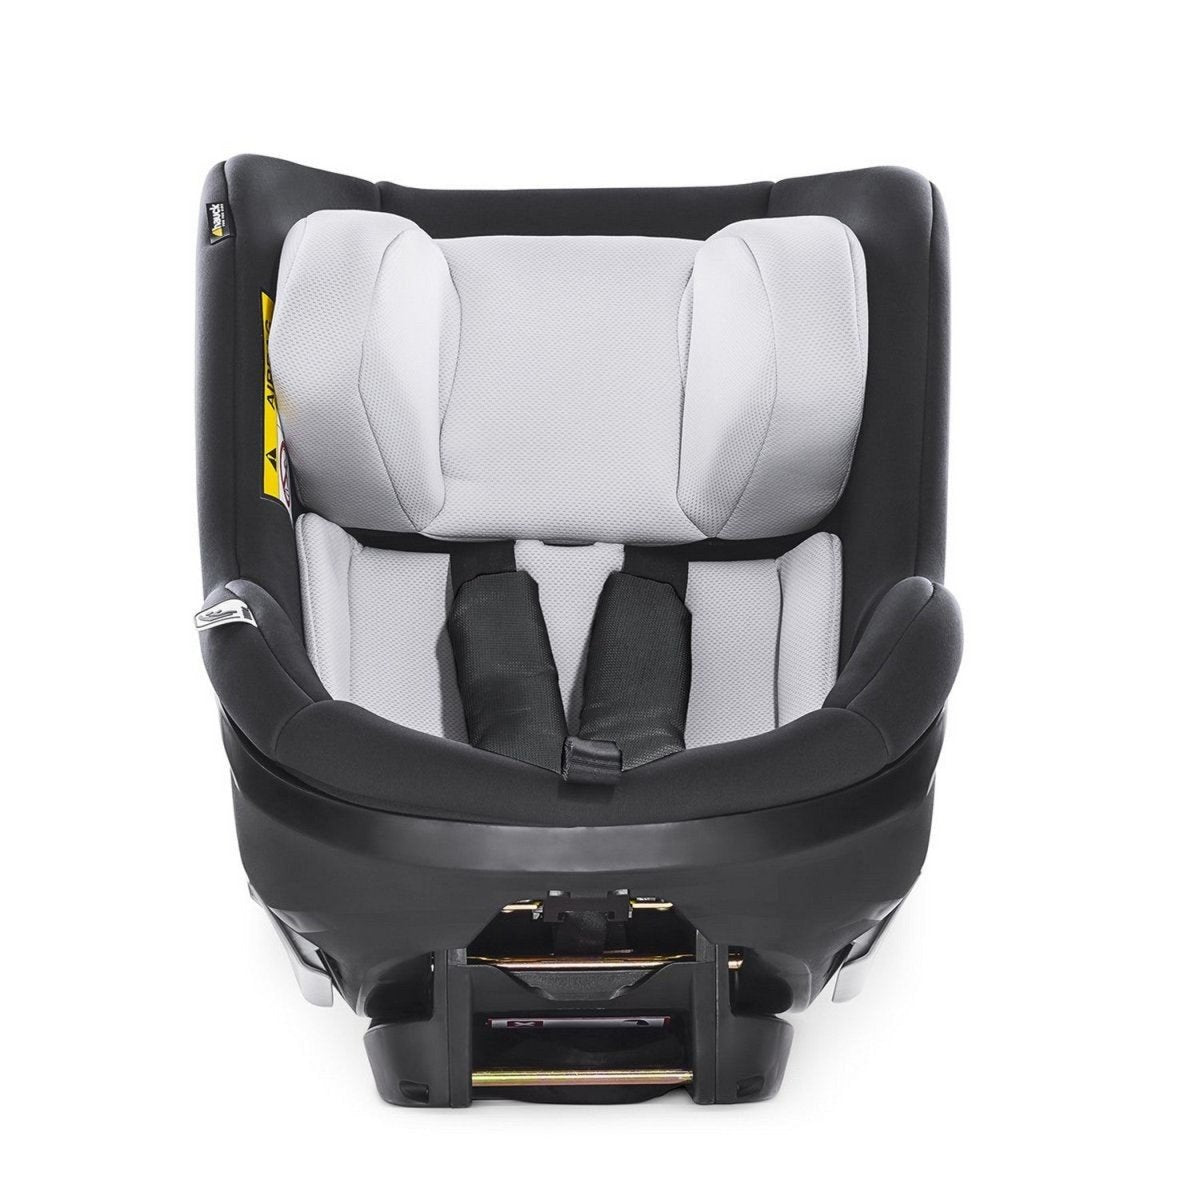 Hauck Ipro Kids Convertible Car Seat For Baby & Kids- Caviar - 614167